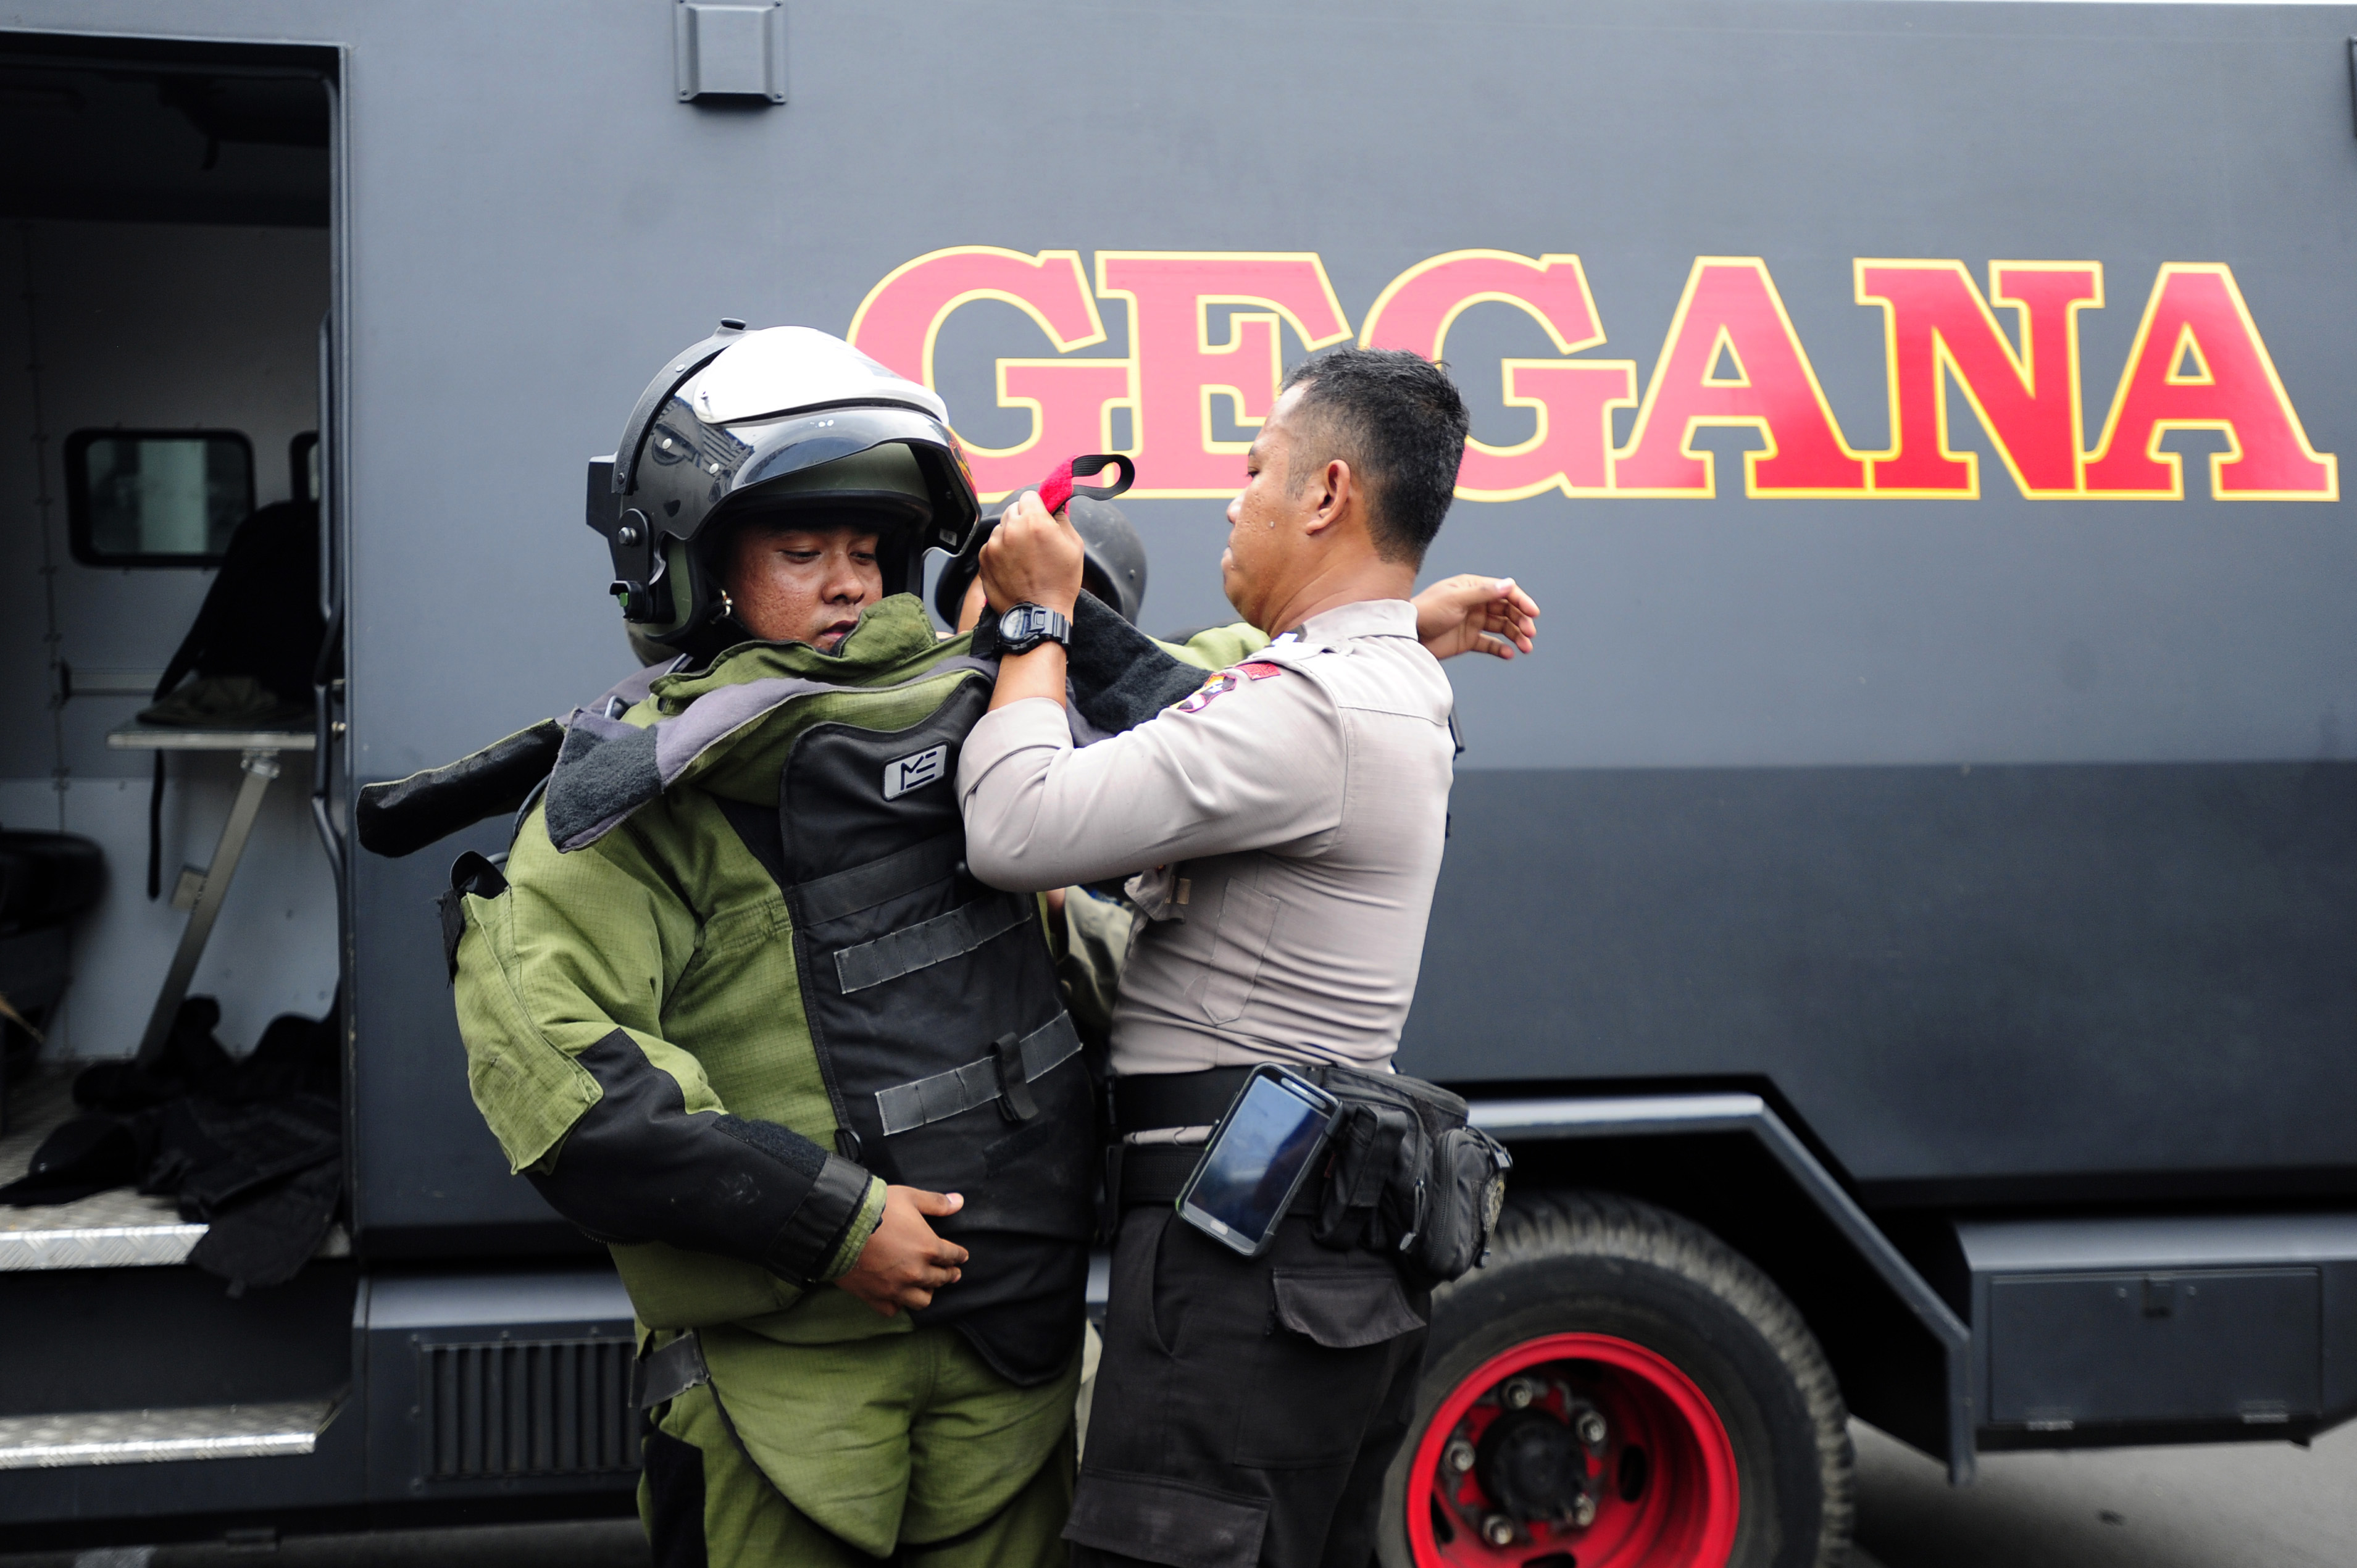 Polisi Tangkap Tiga Warga Cirebon Yang Diduga Terlibat Bom Sarinah